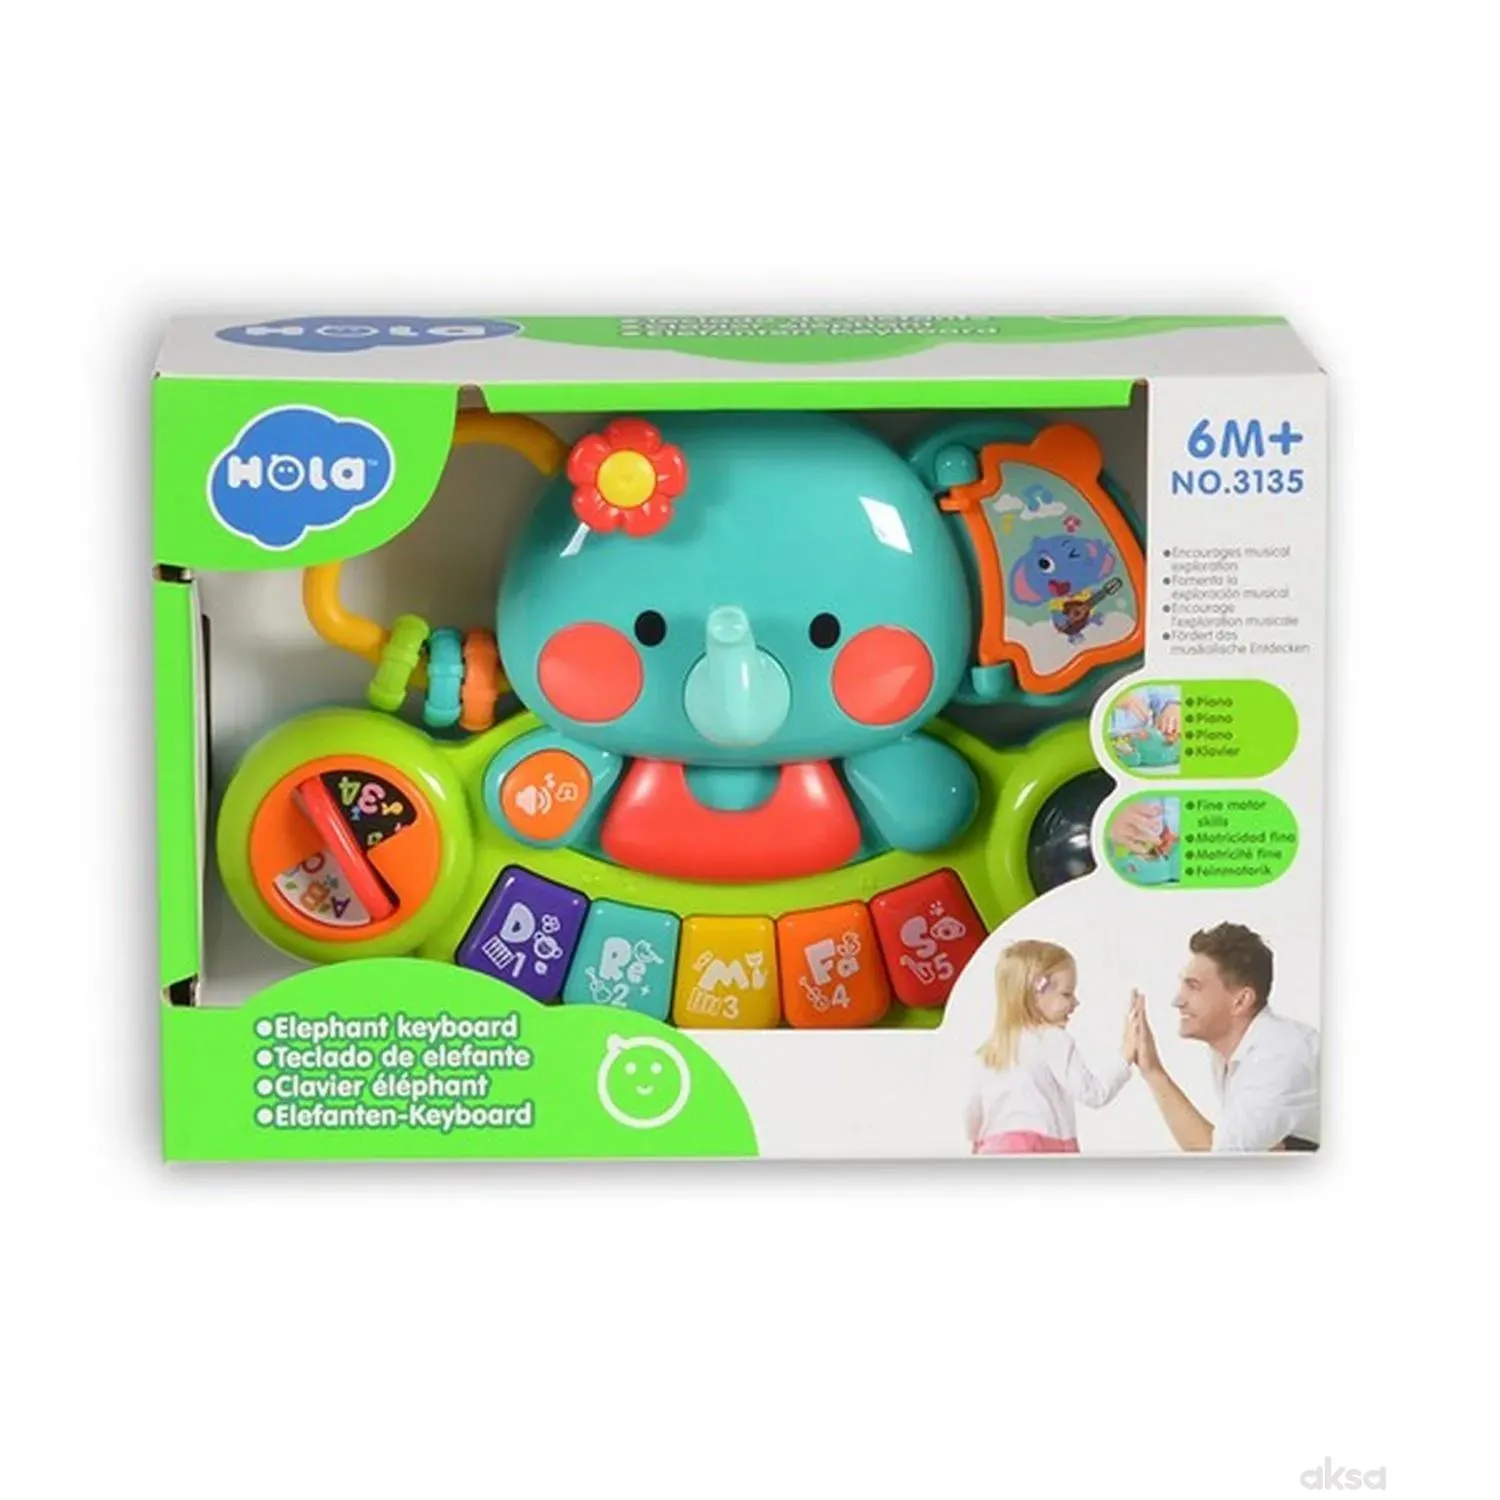 HK Mini, igračka tastatura slonče sa muzikom 